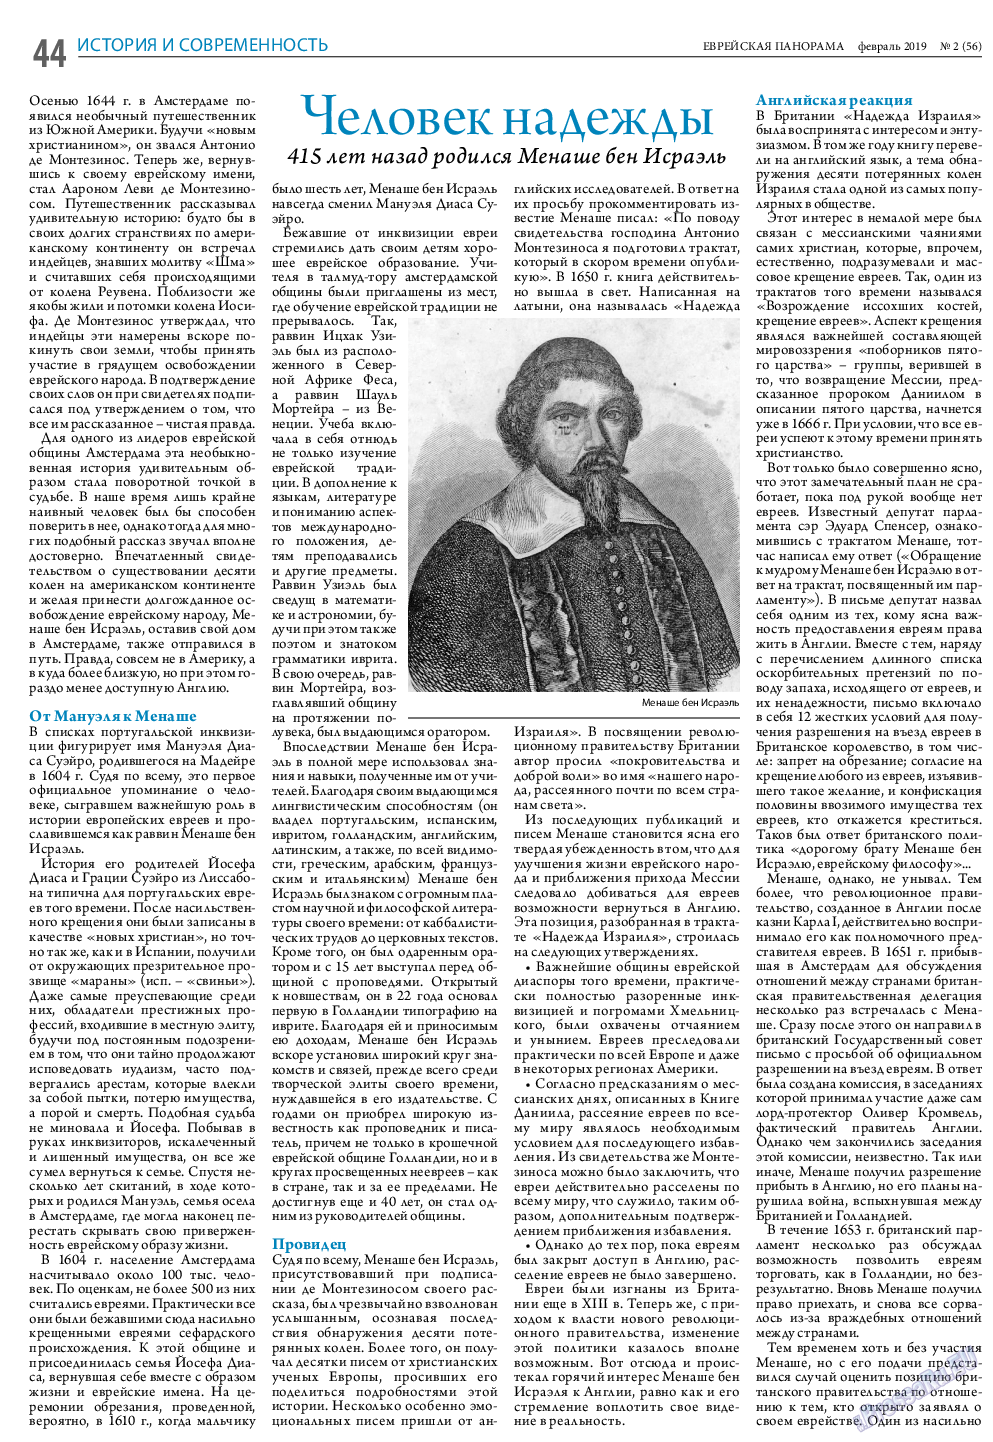 Еврейская панорама, газета. 2019 №2 стр.44